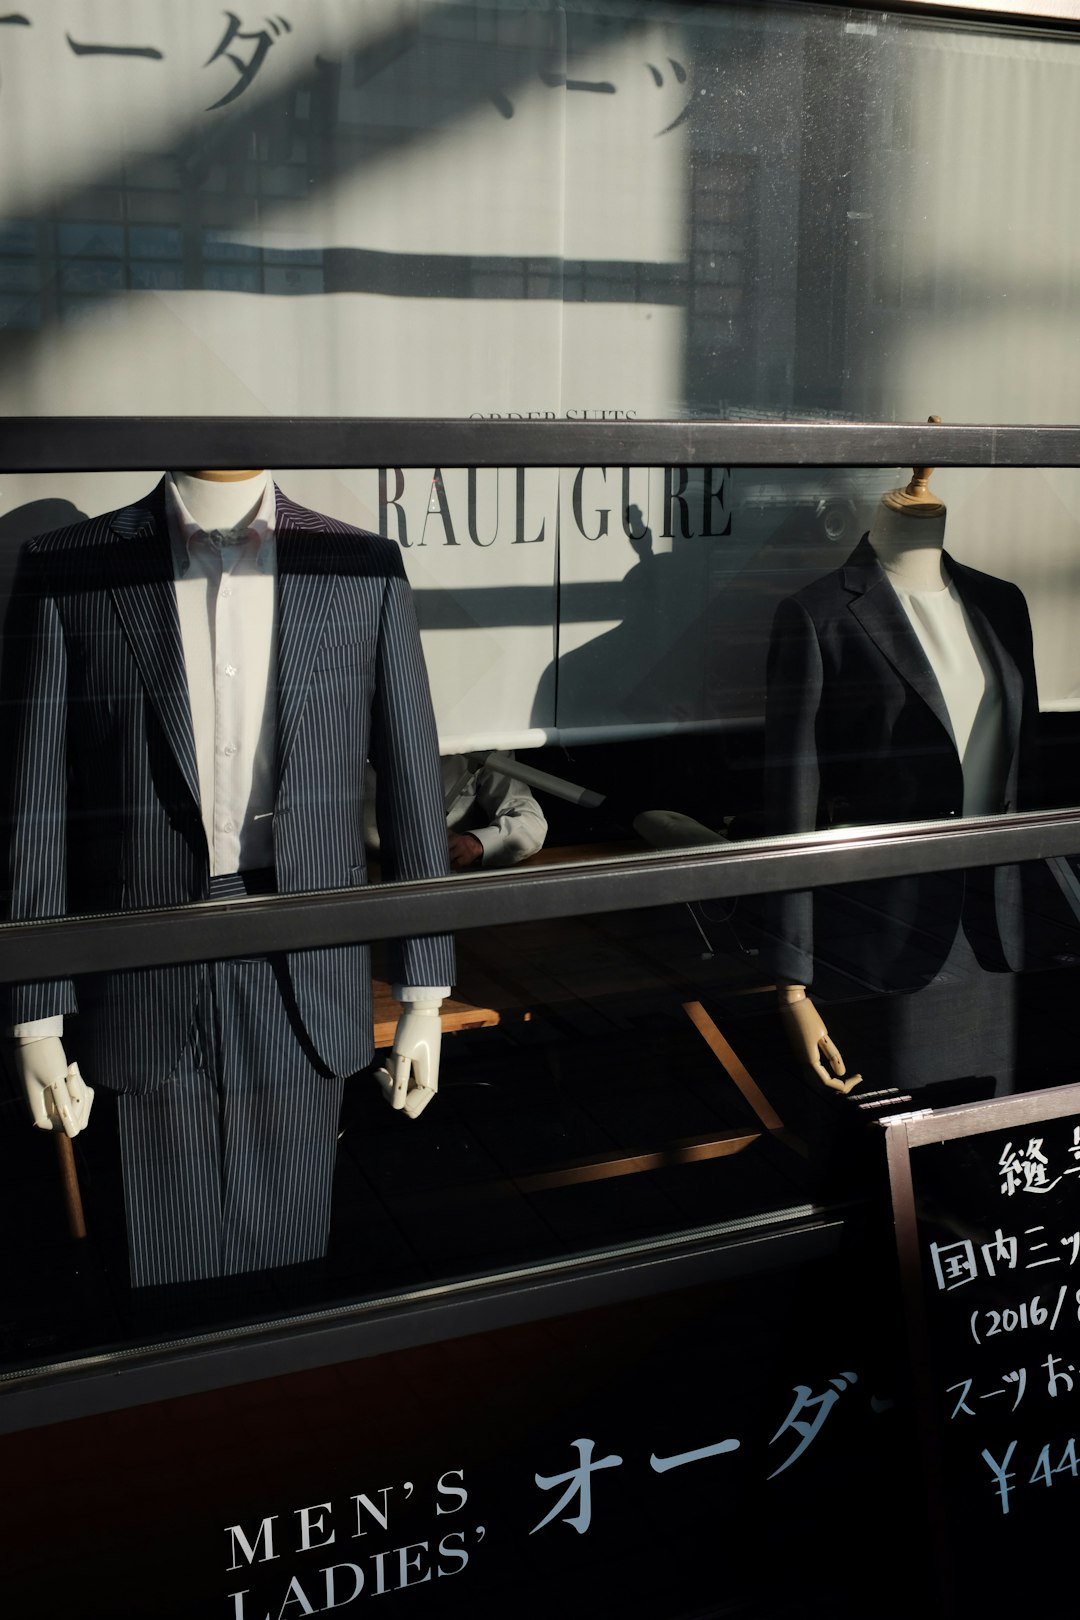 black formal suit